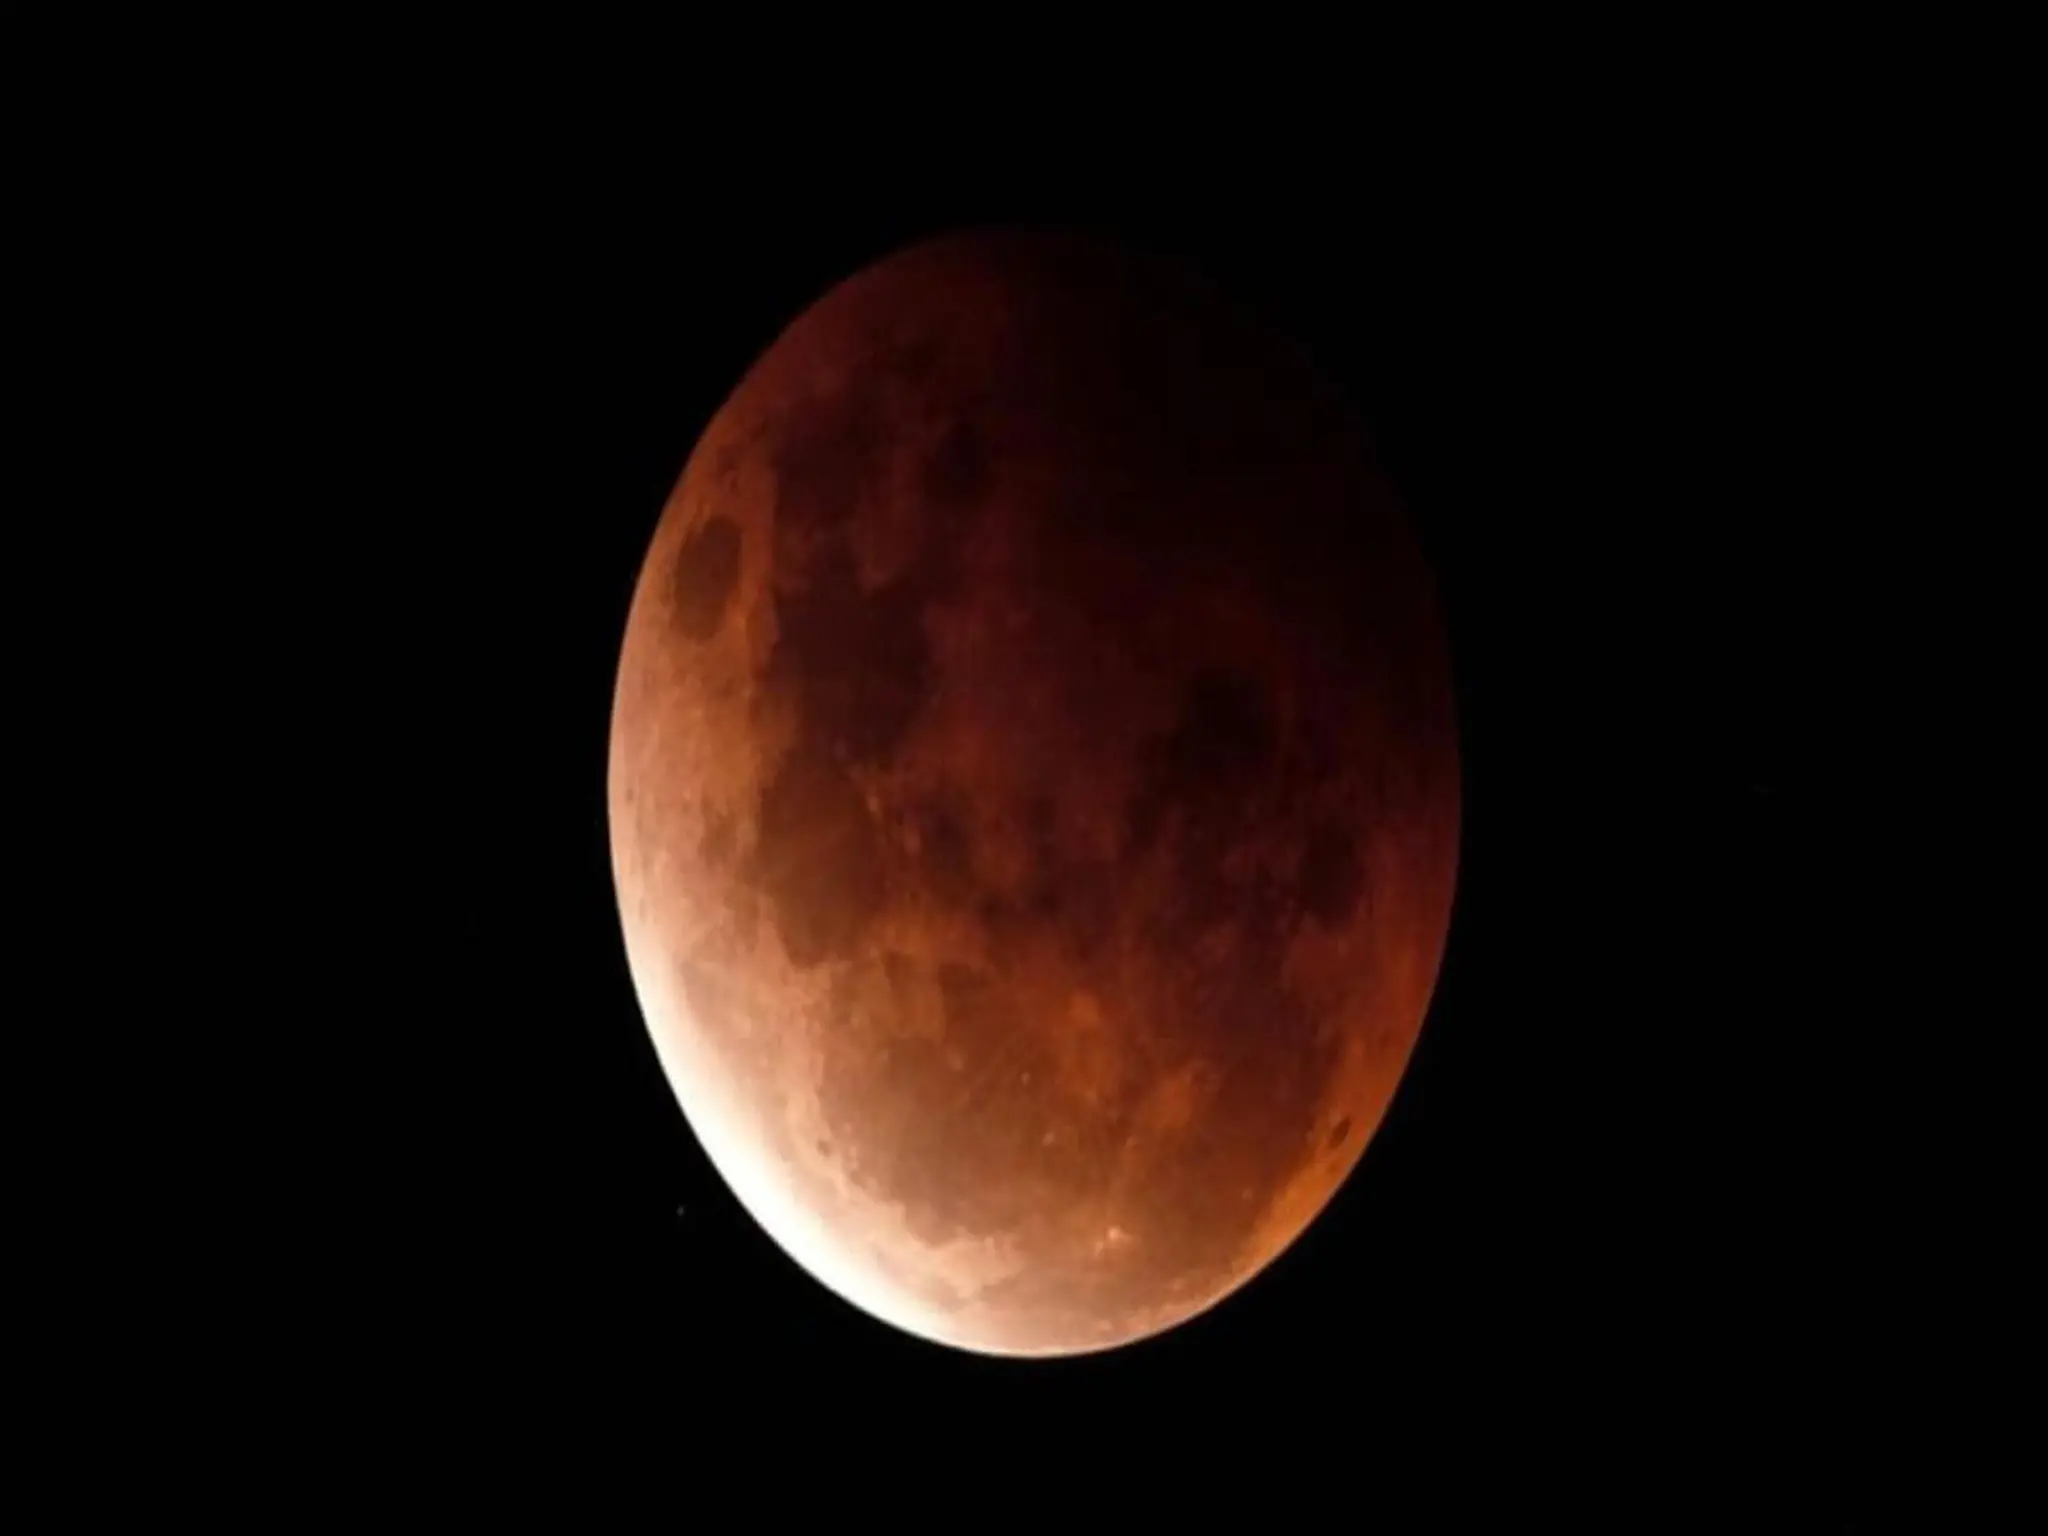 Flower moon.. UAE witnesses a lunar eclipse tonight